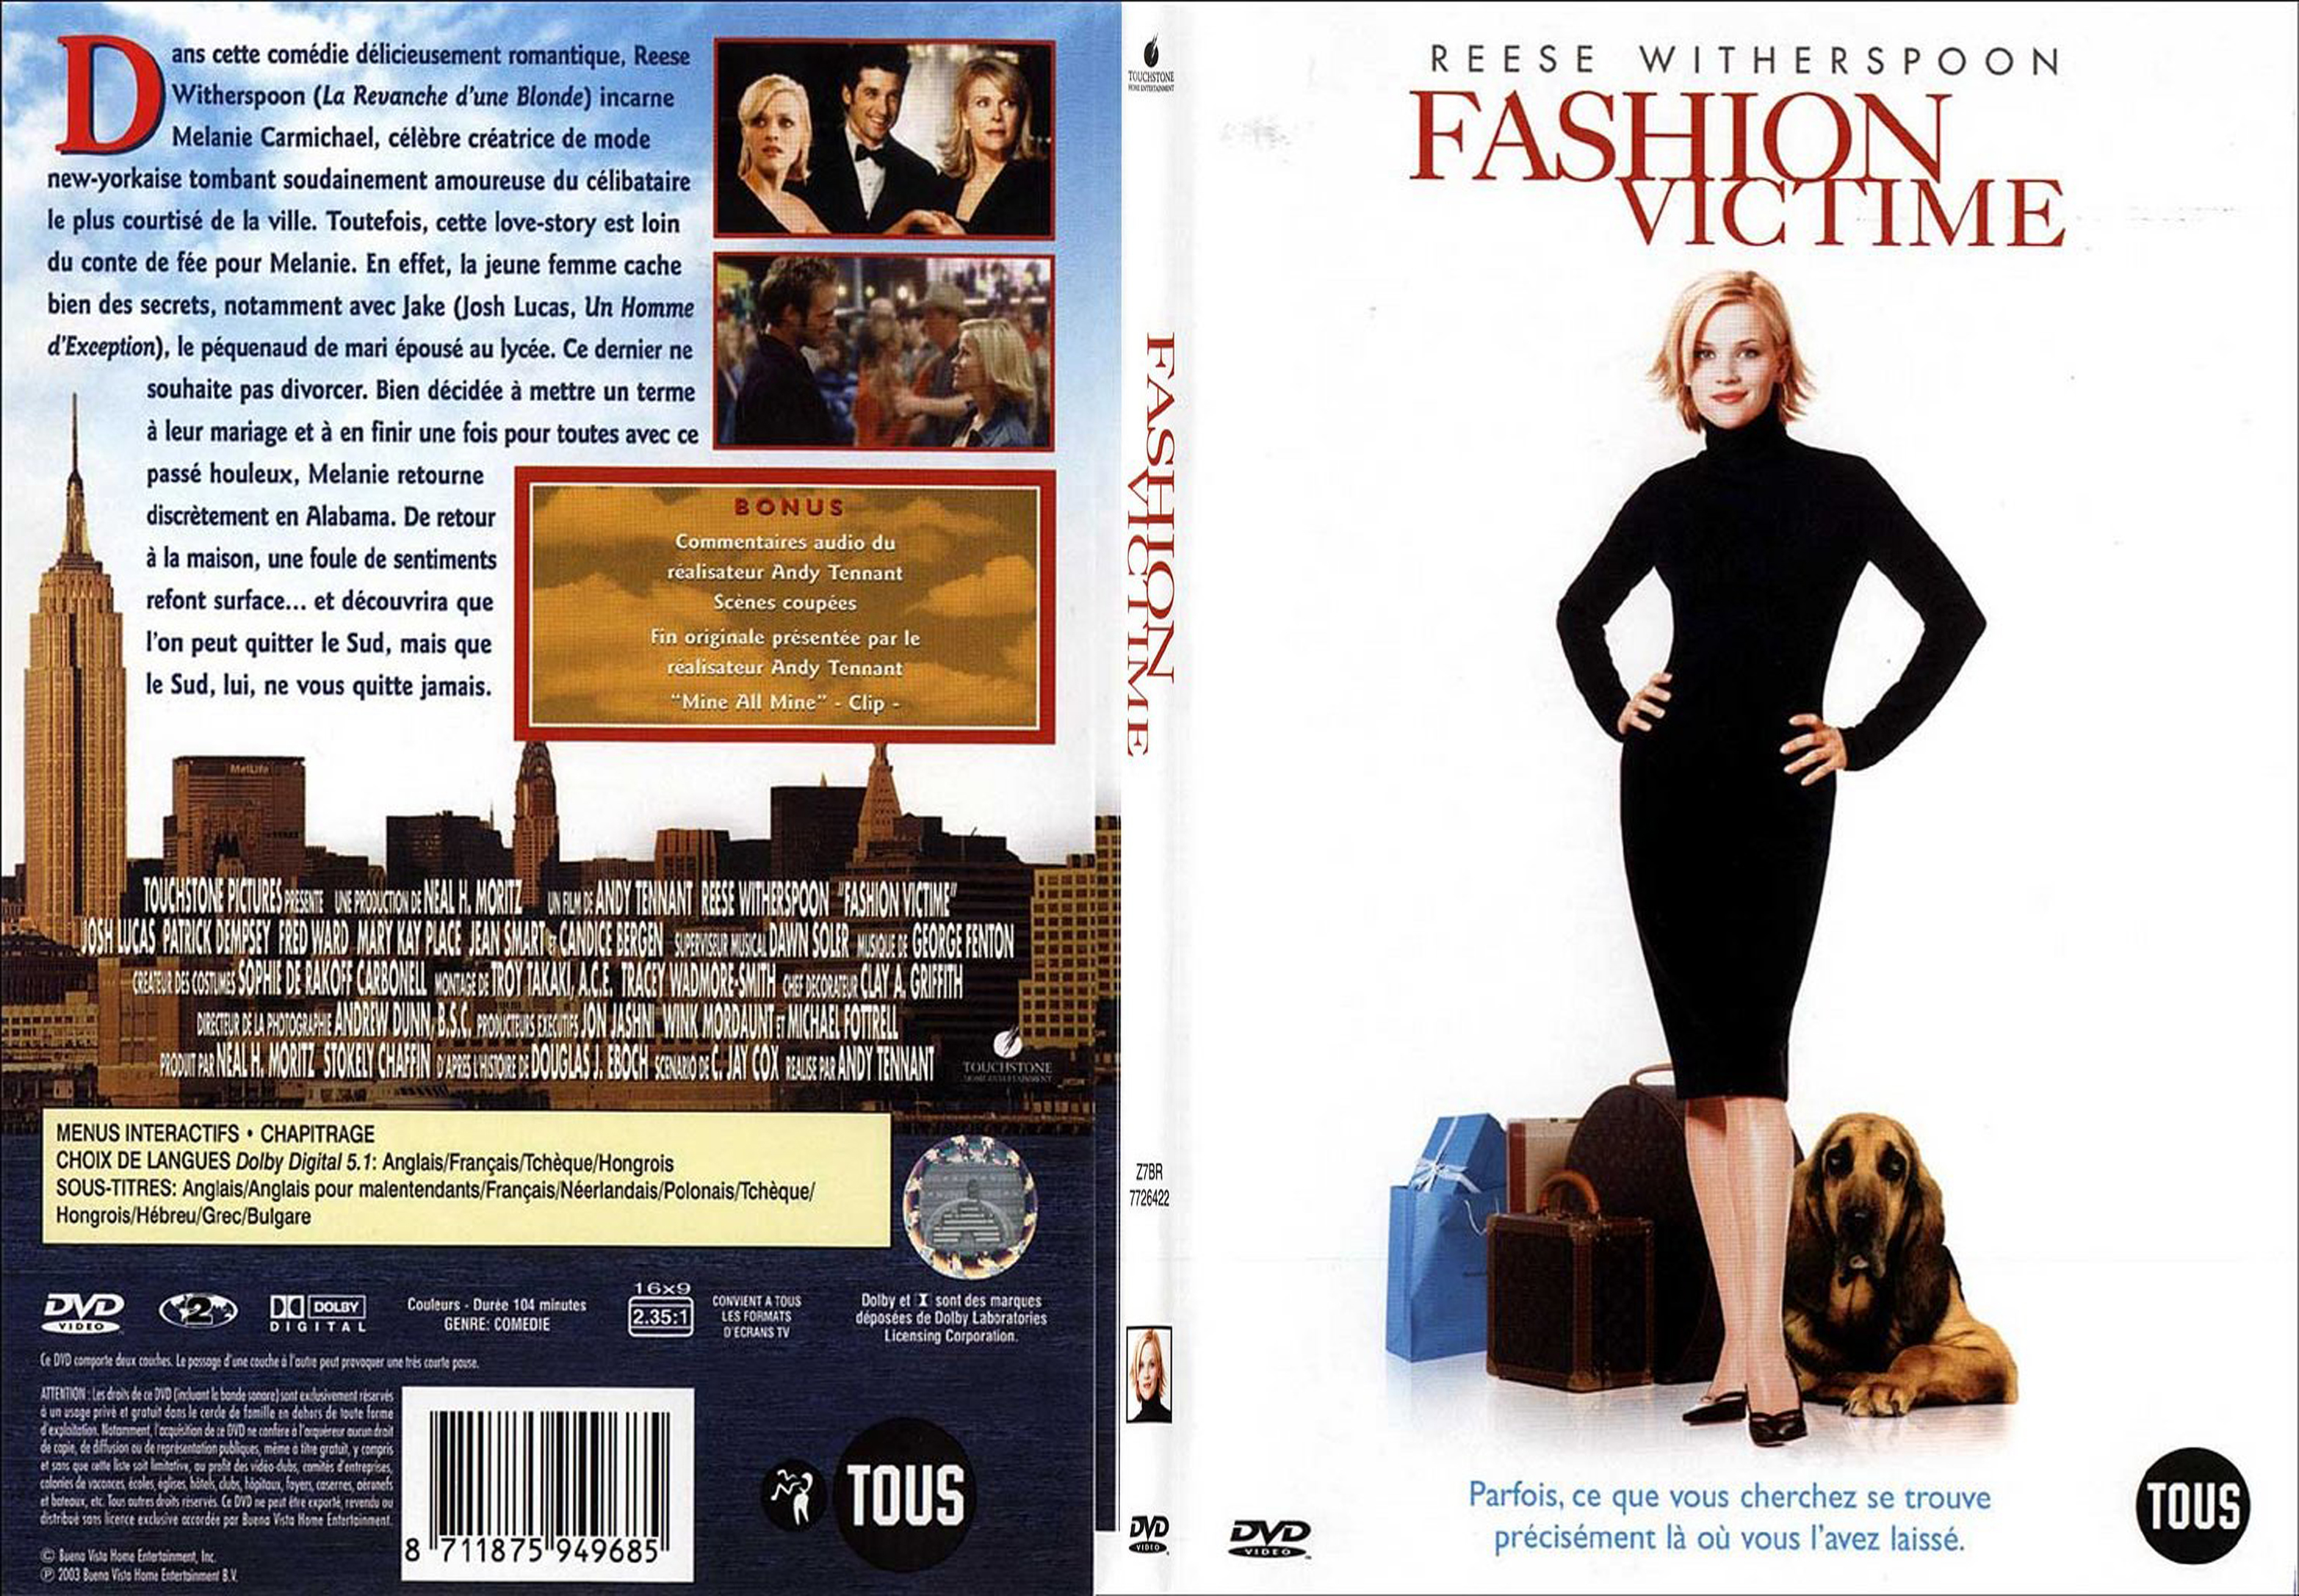 Jaquette DVD Fashion victime - SLIM